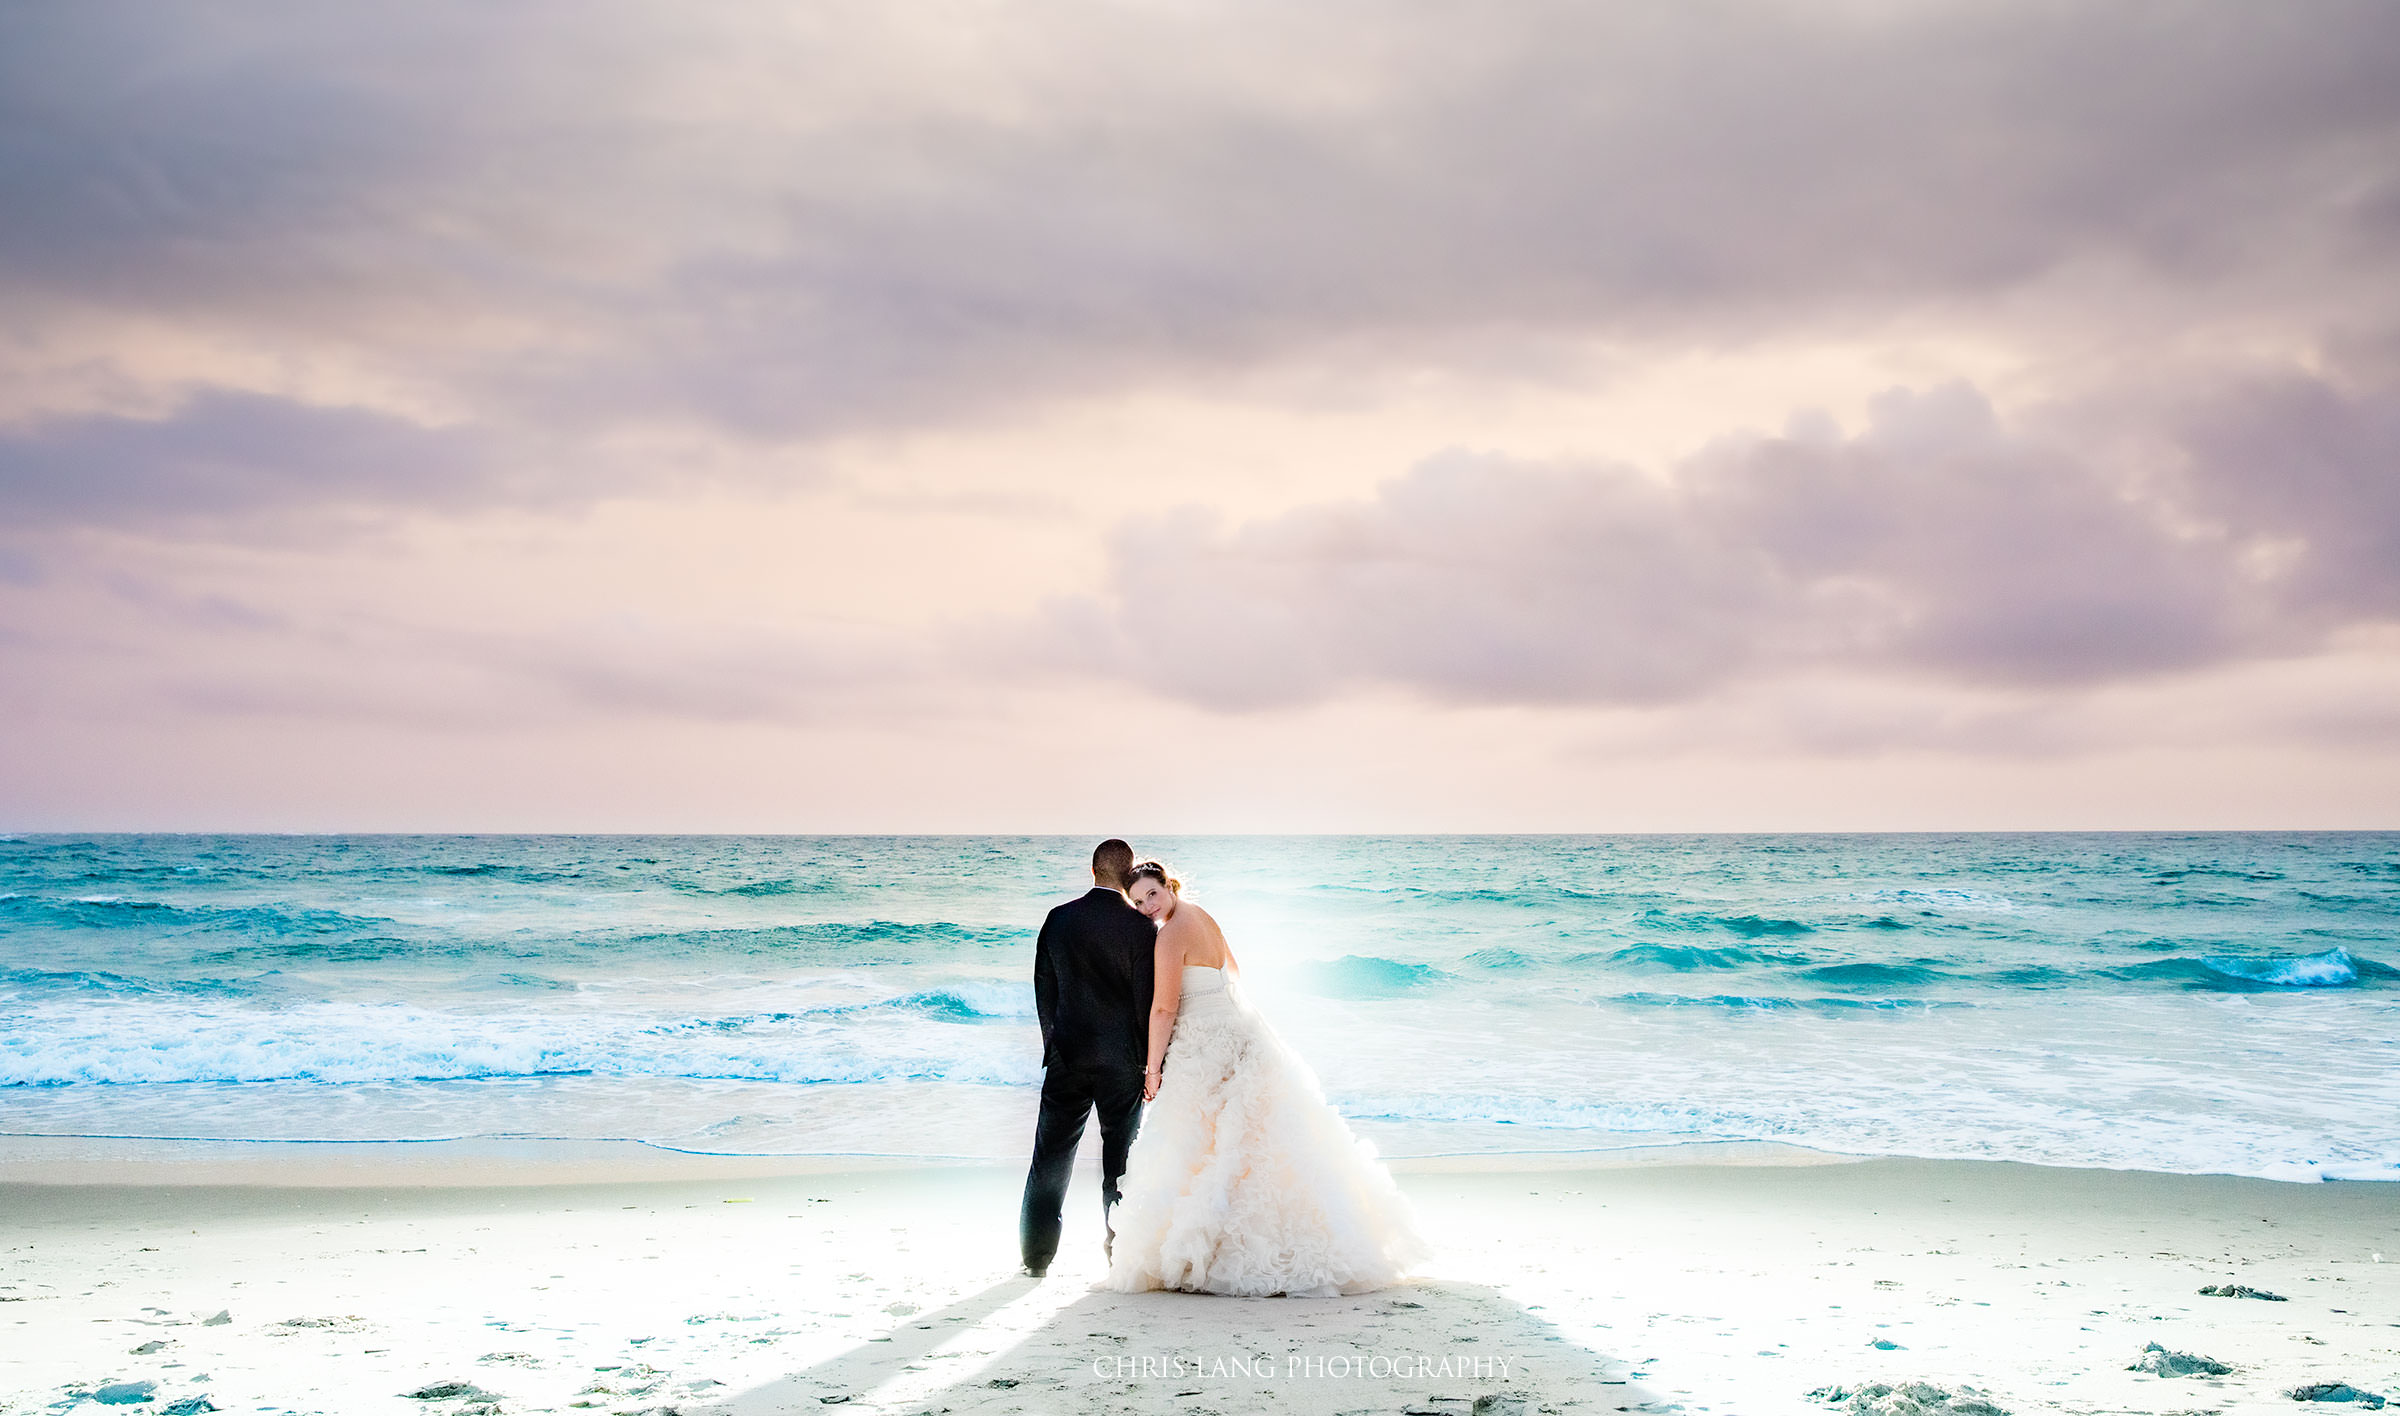 Bald Head Island NC - Wedding Photographers - wedding dress - Bride - Groom- wedding twilight picture -Chris Lang Photography - shoals club - destination weddings